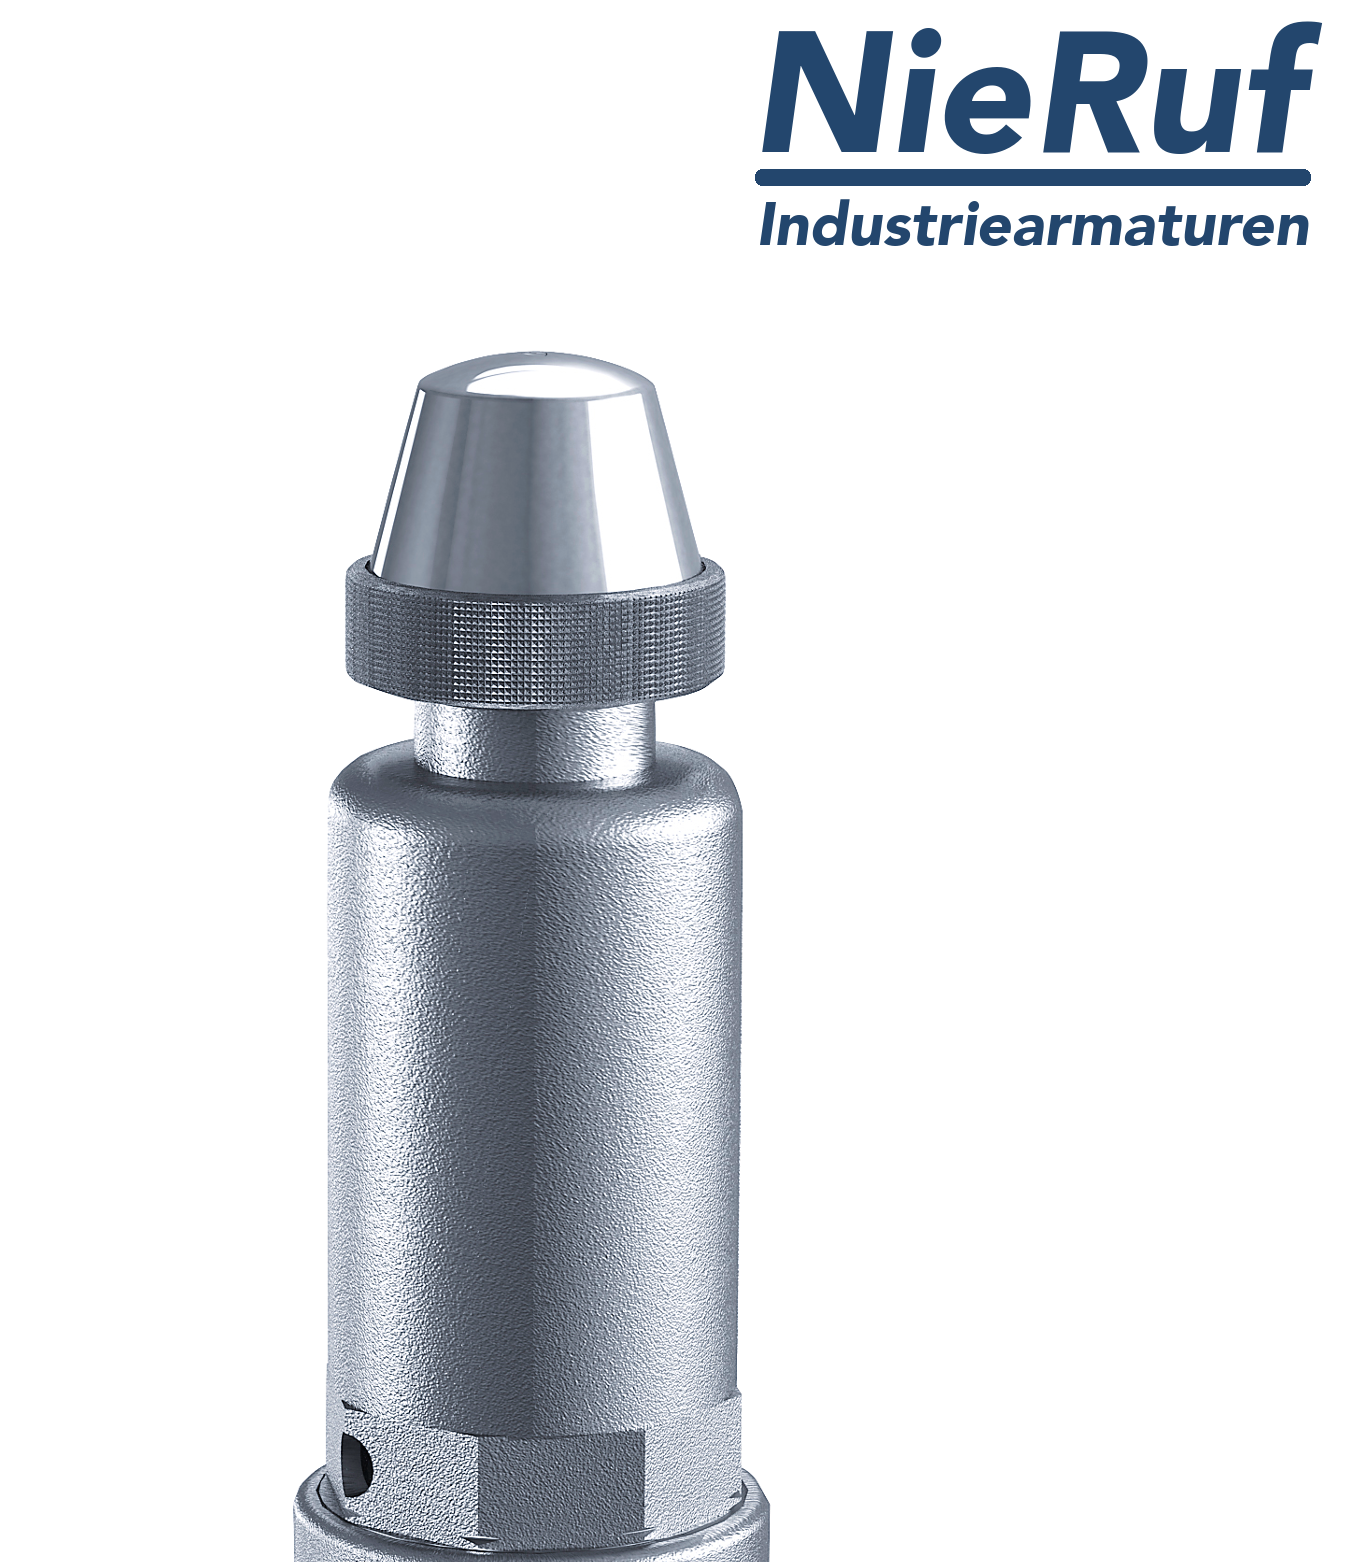 valvola di sicurezza 1" x 1 1/2" F SV09 fluidi gassosi neutri, acciaio inox NBR